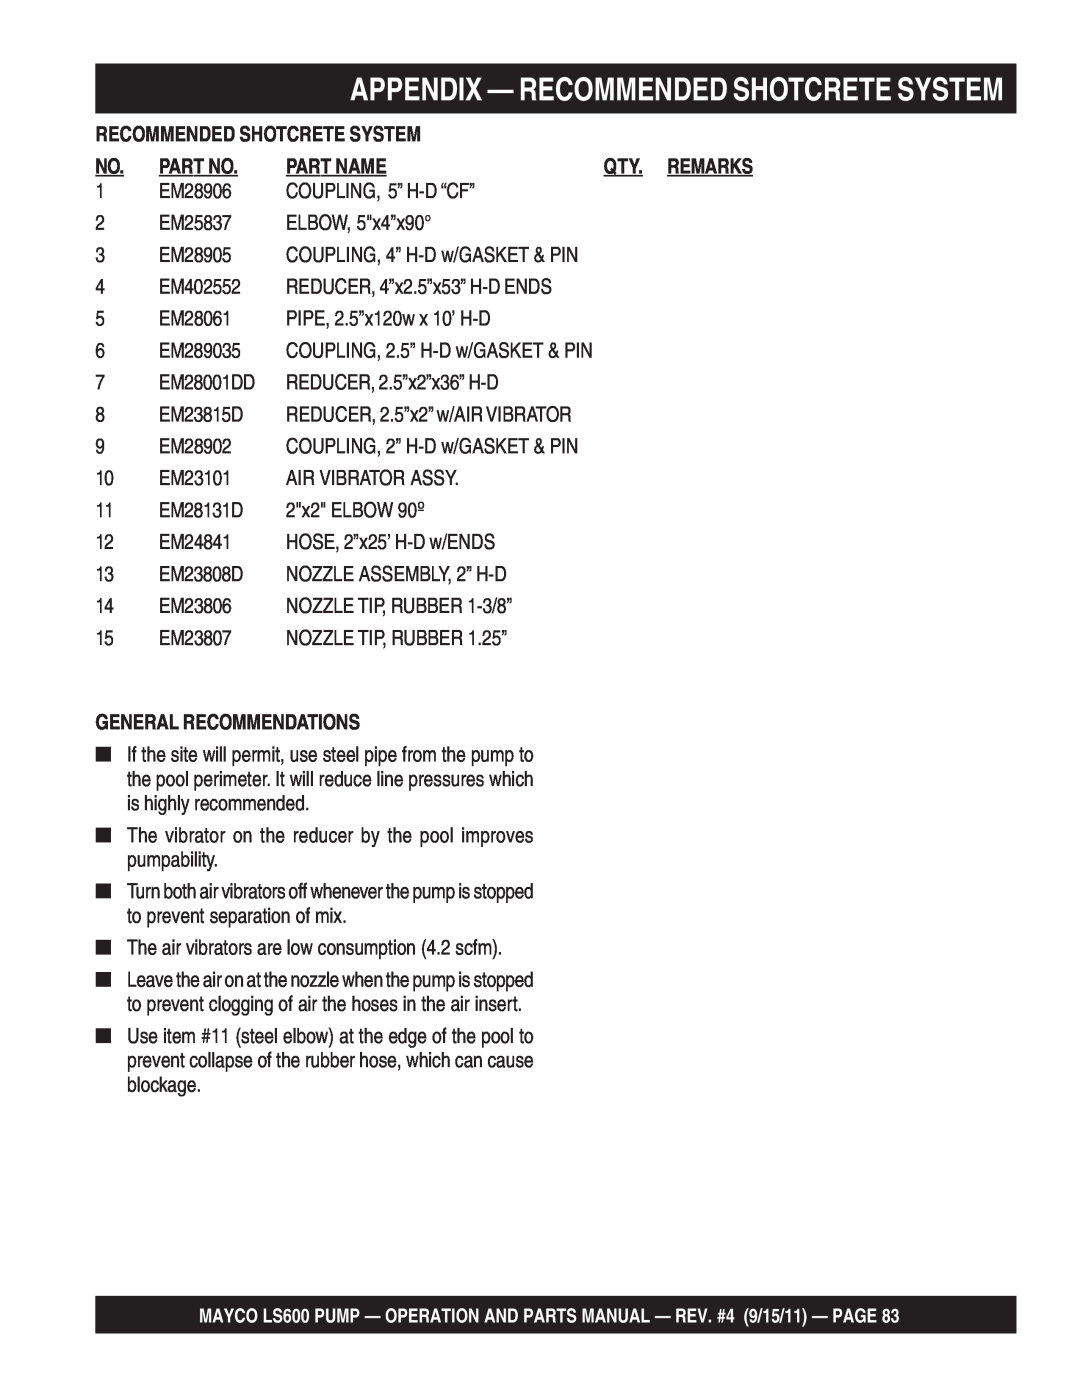 Multiquip LS600 manual Appendix — Recommended Shotcrete System, No. Part No, Part Name, General Recommendations 